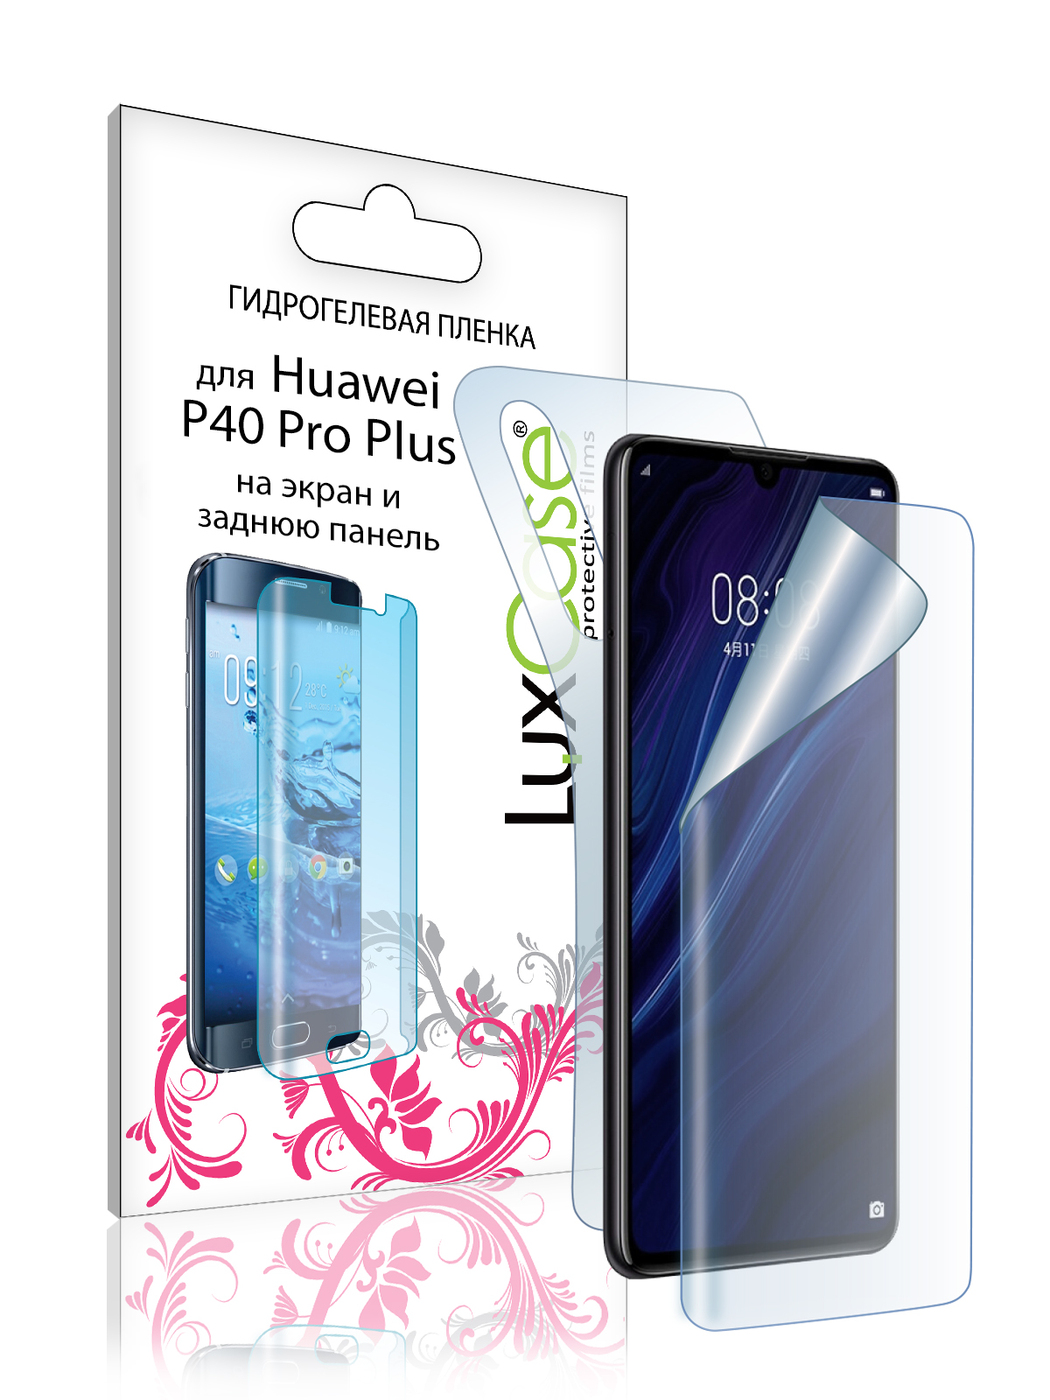 Защитная пленка LuxCase для Huawei P40 Pro Plus Front and Back 0.14mm Transparent 86135 защитная пленка luxcase для oneplus 7t front and back 0 14mm transparent 86158